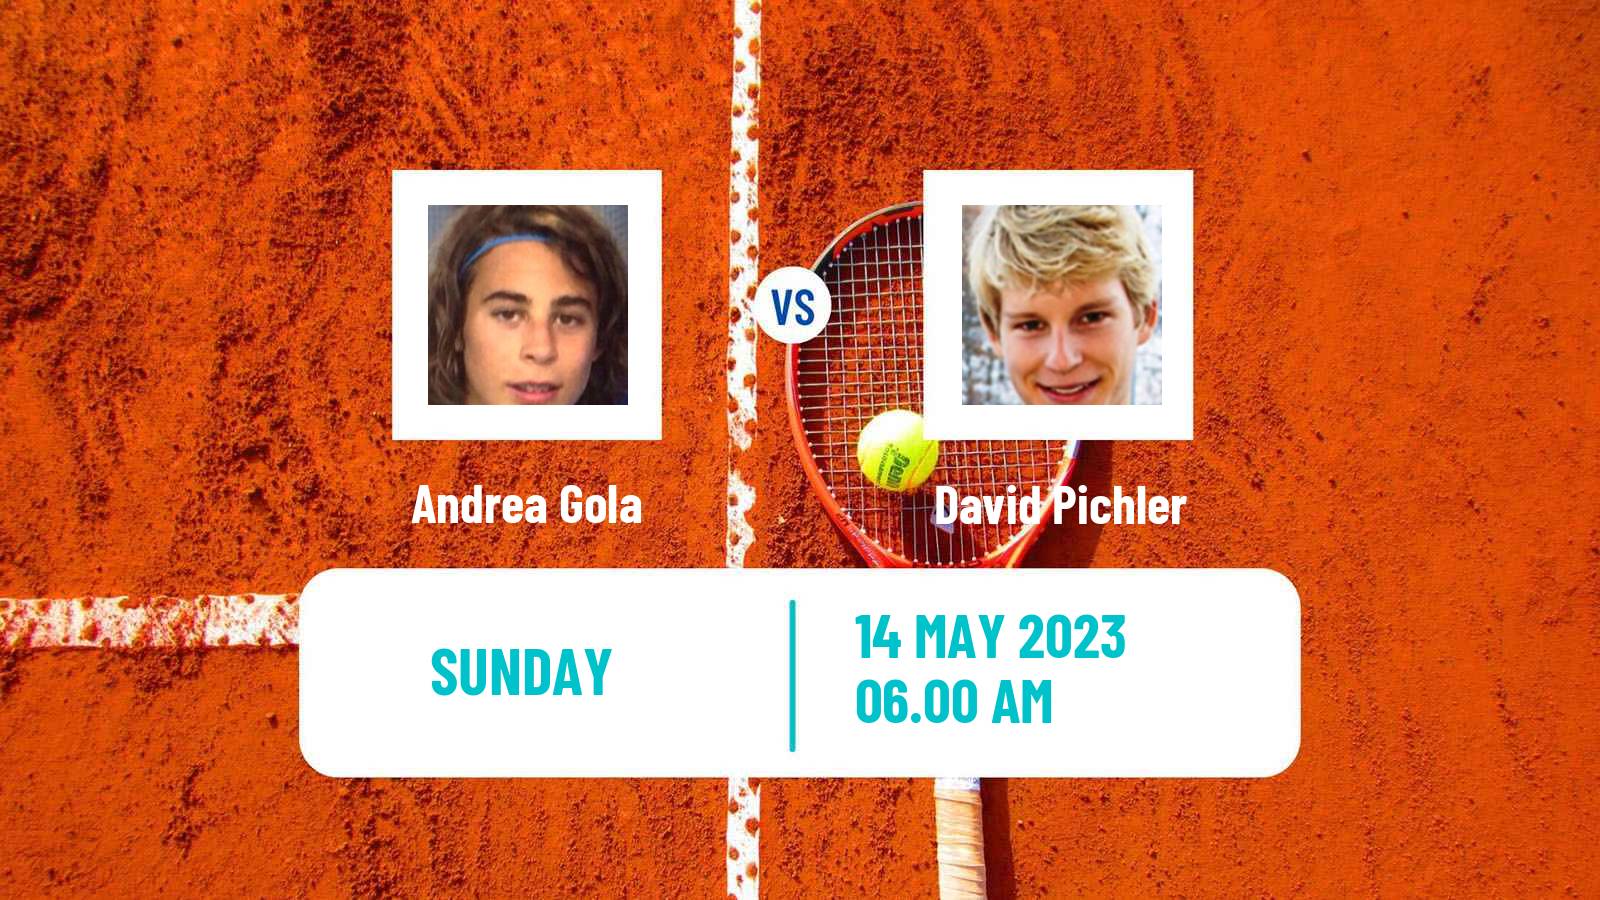 Tennis ATP Challenger Andrea Gola - David Pichler